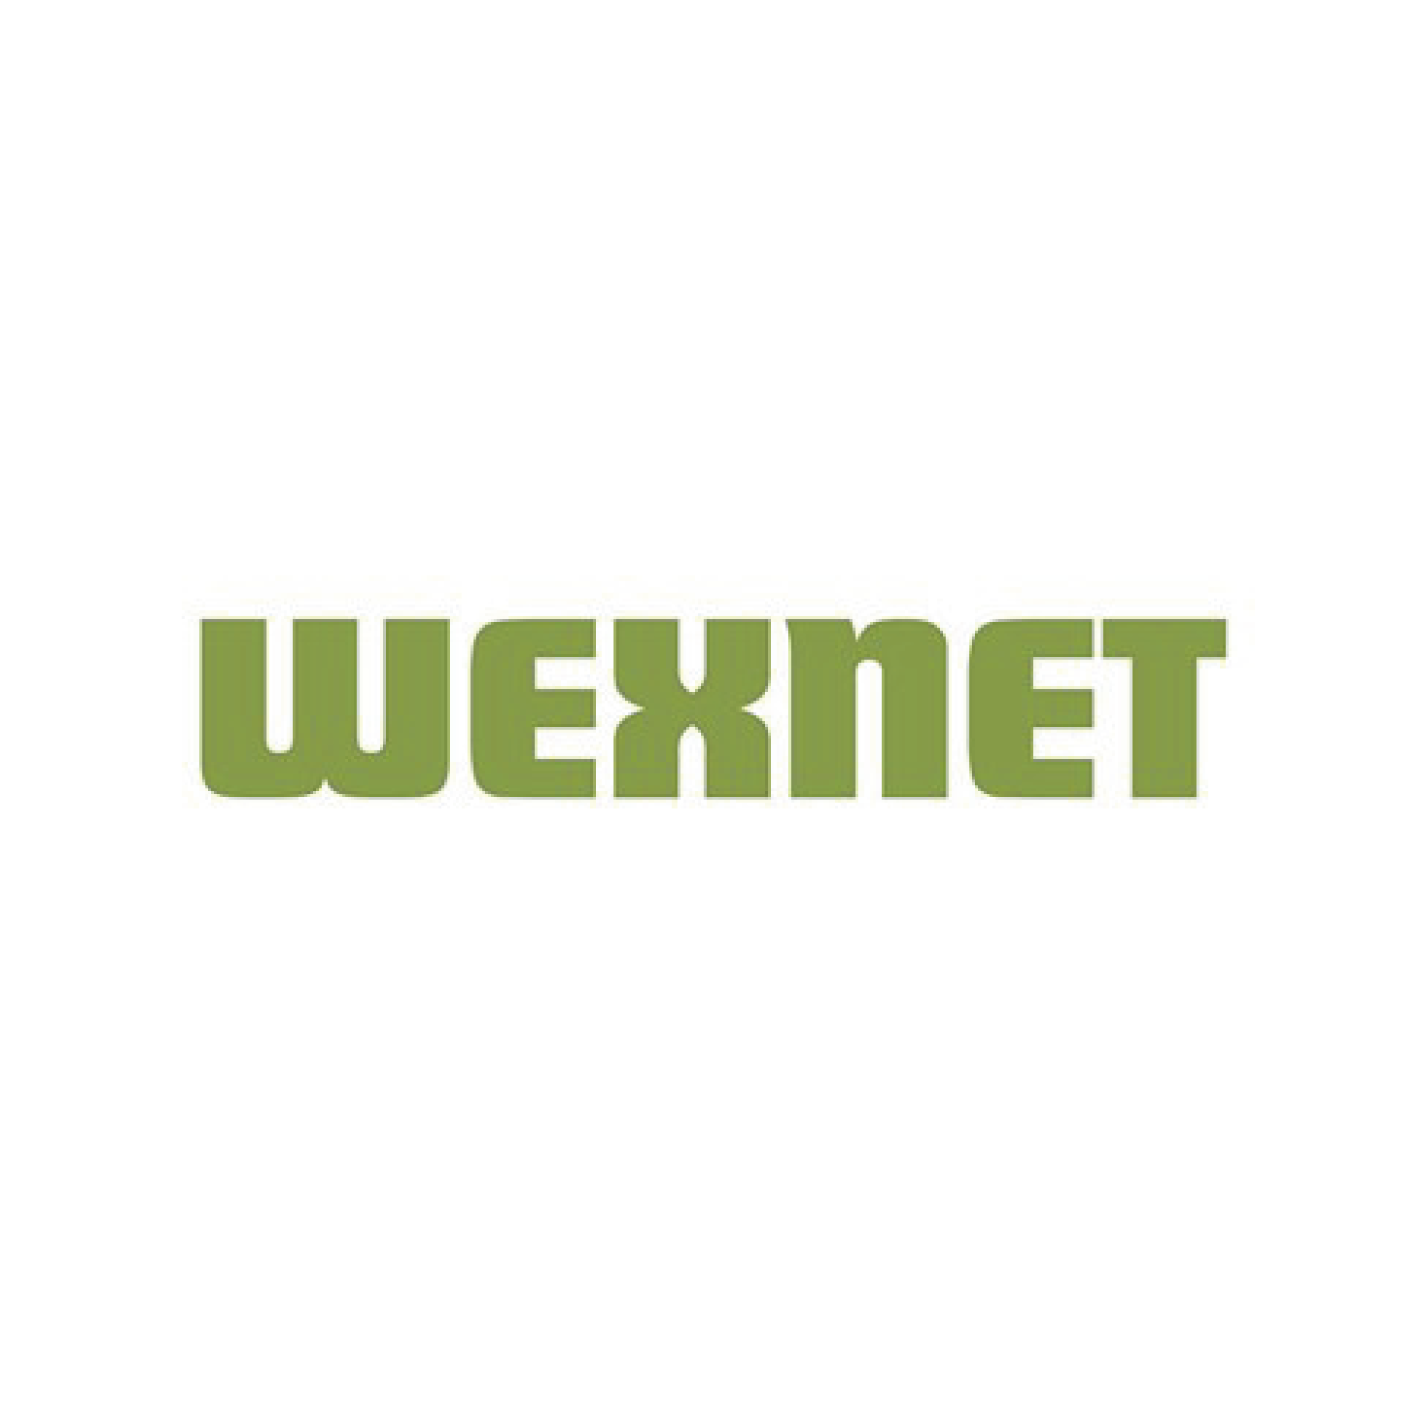 Wexnet